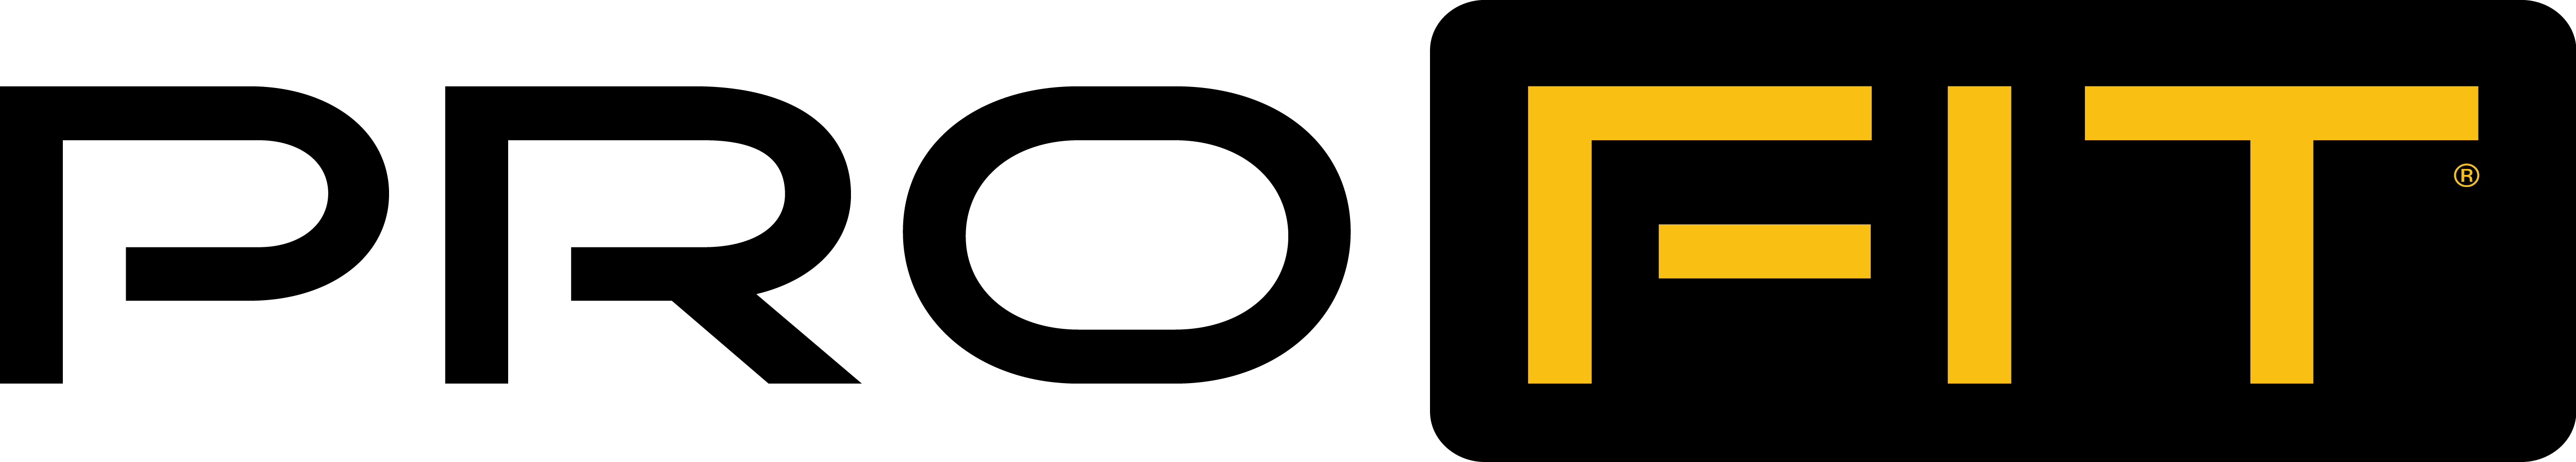 Profit logo